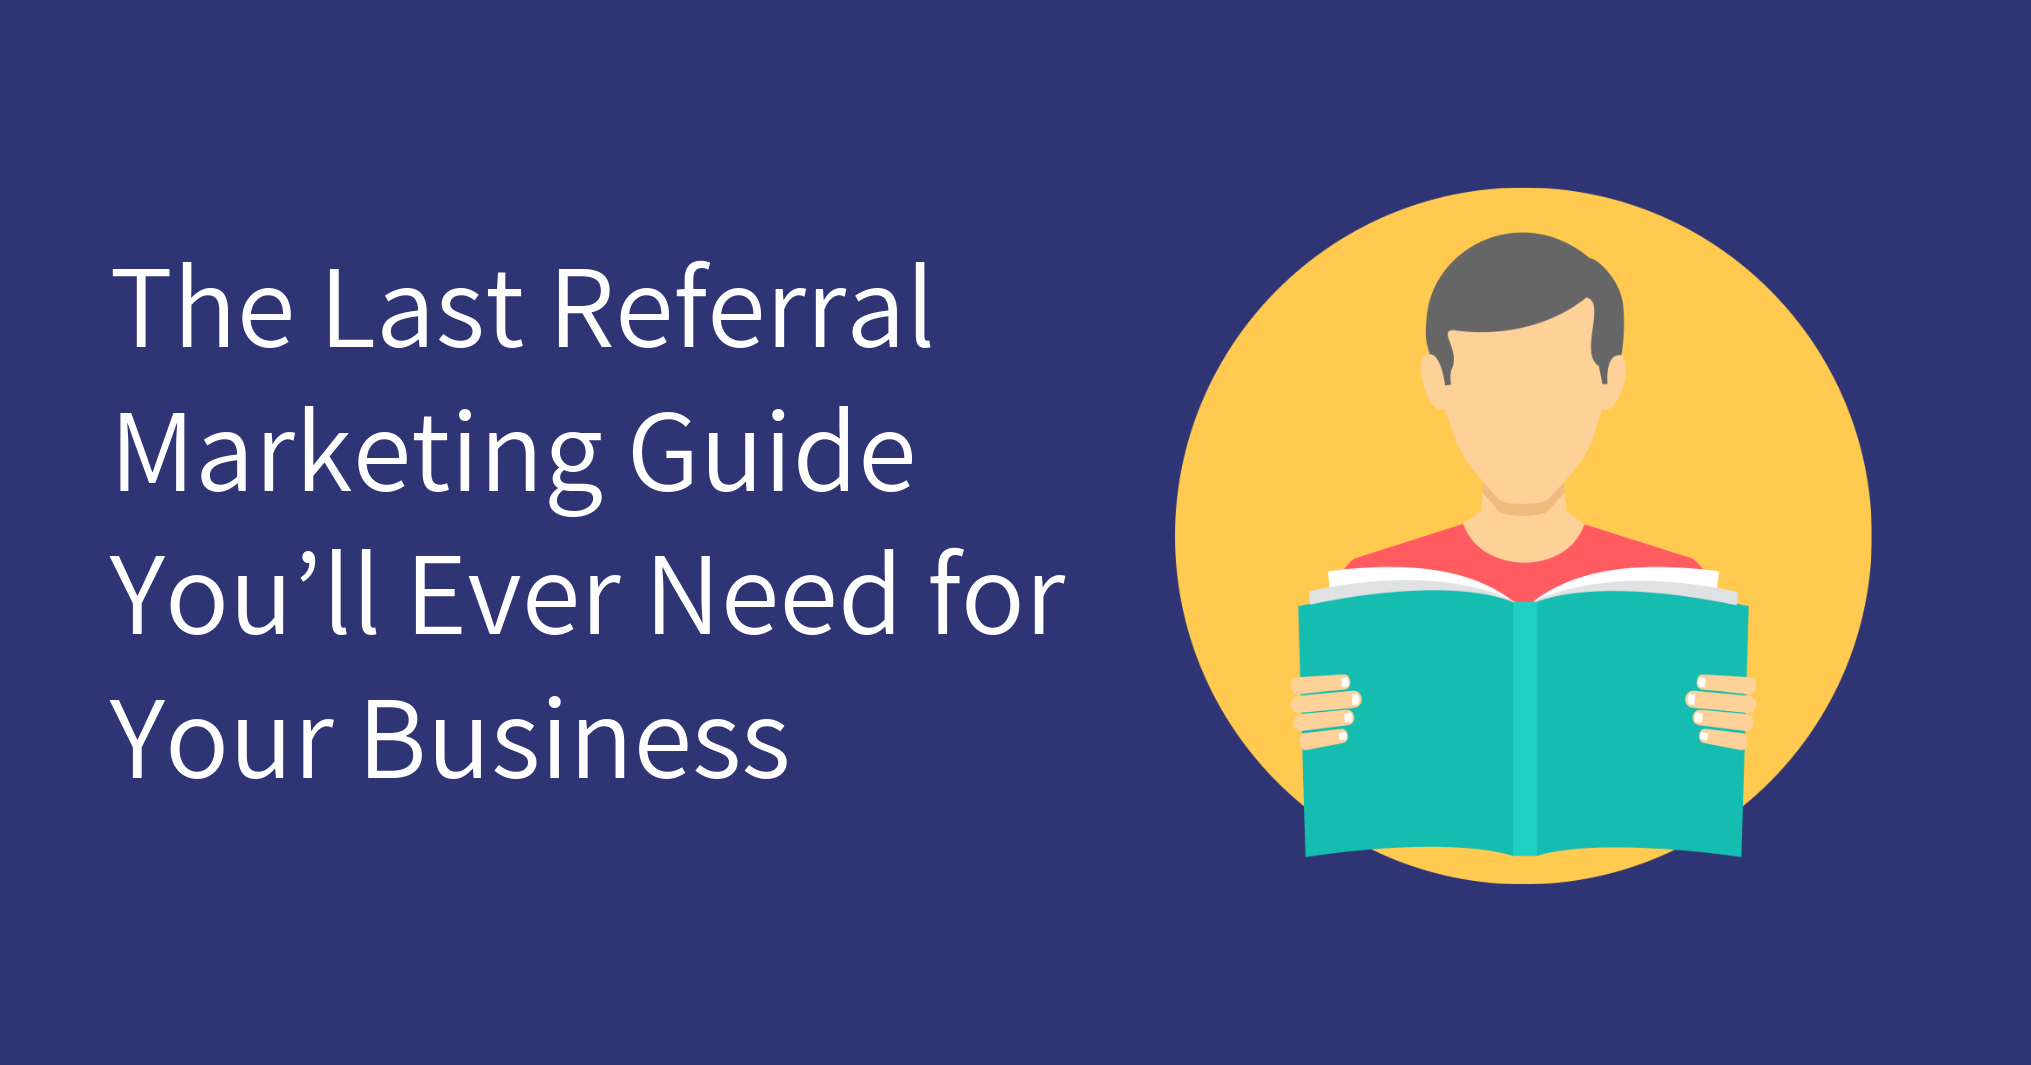 Referral Marketing Guide - Referral Marketing